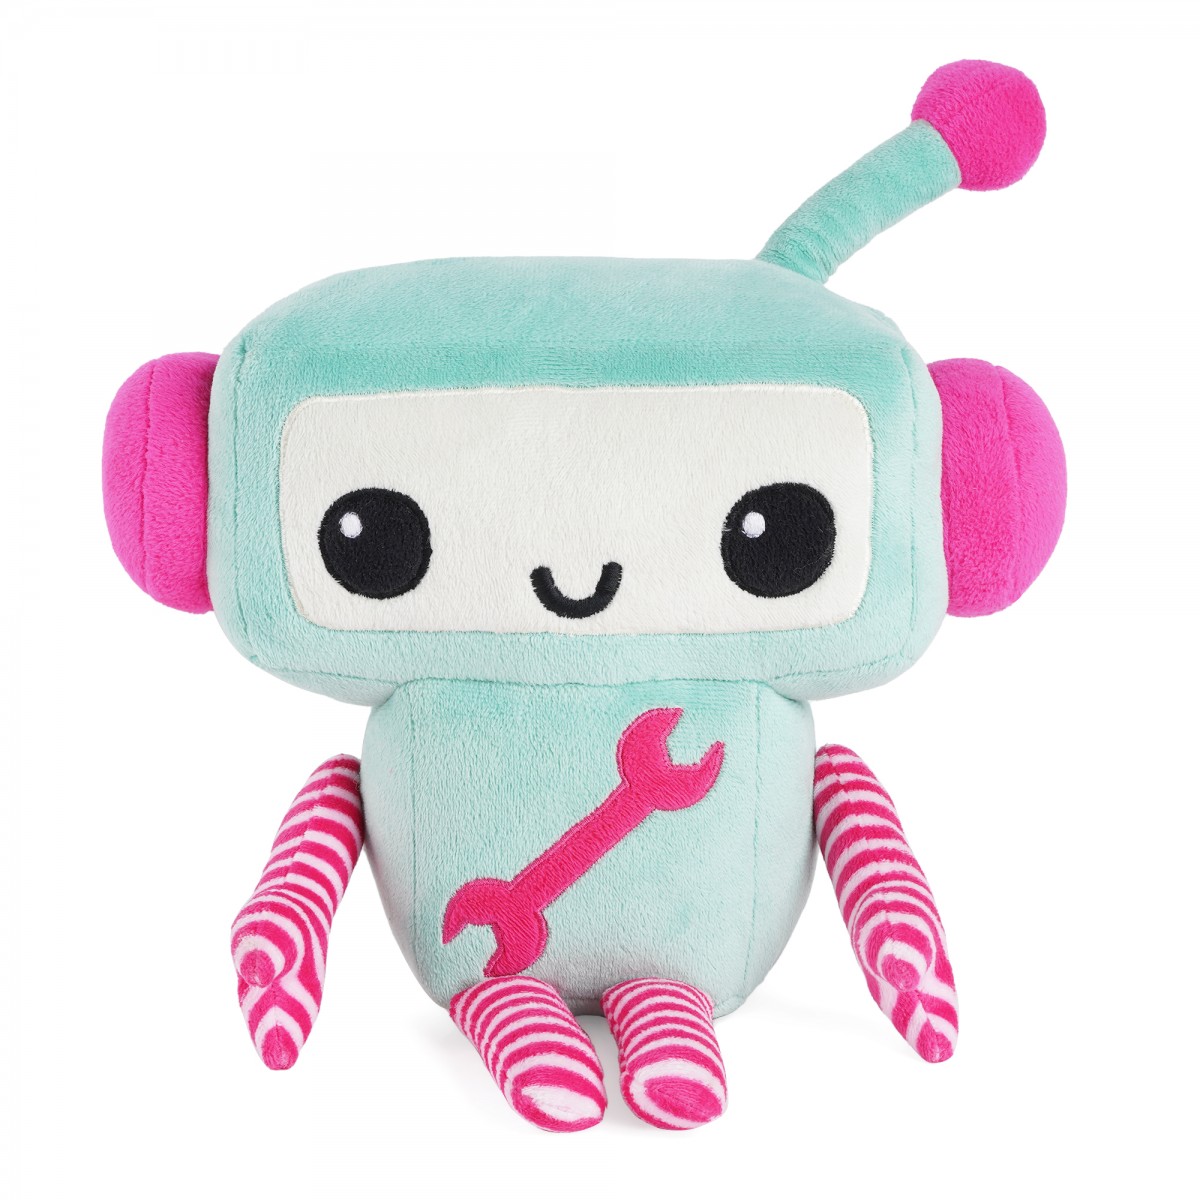 Fuzzbuzz Heartie Robot For Kids, 2M+